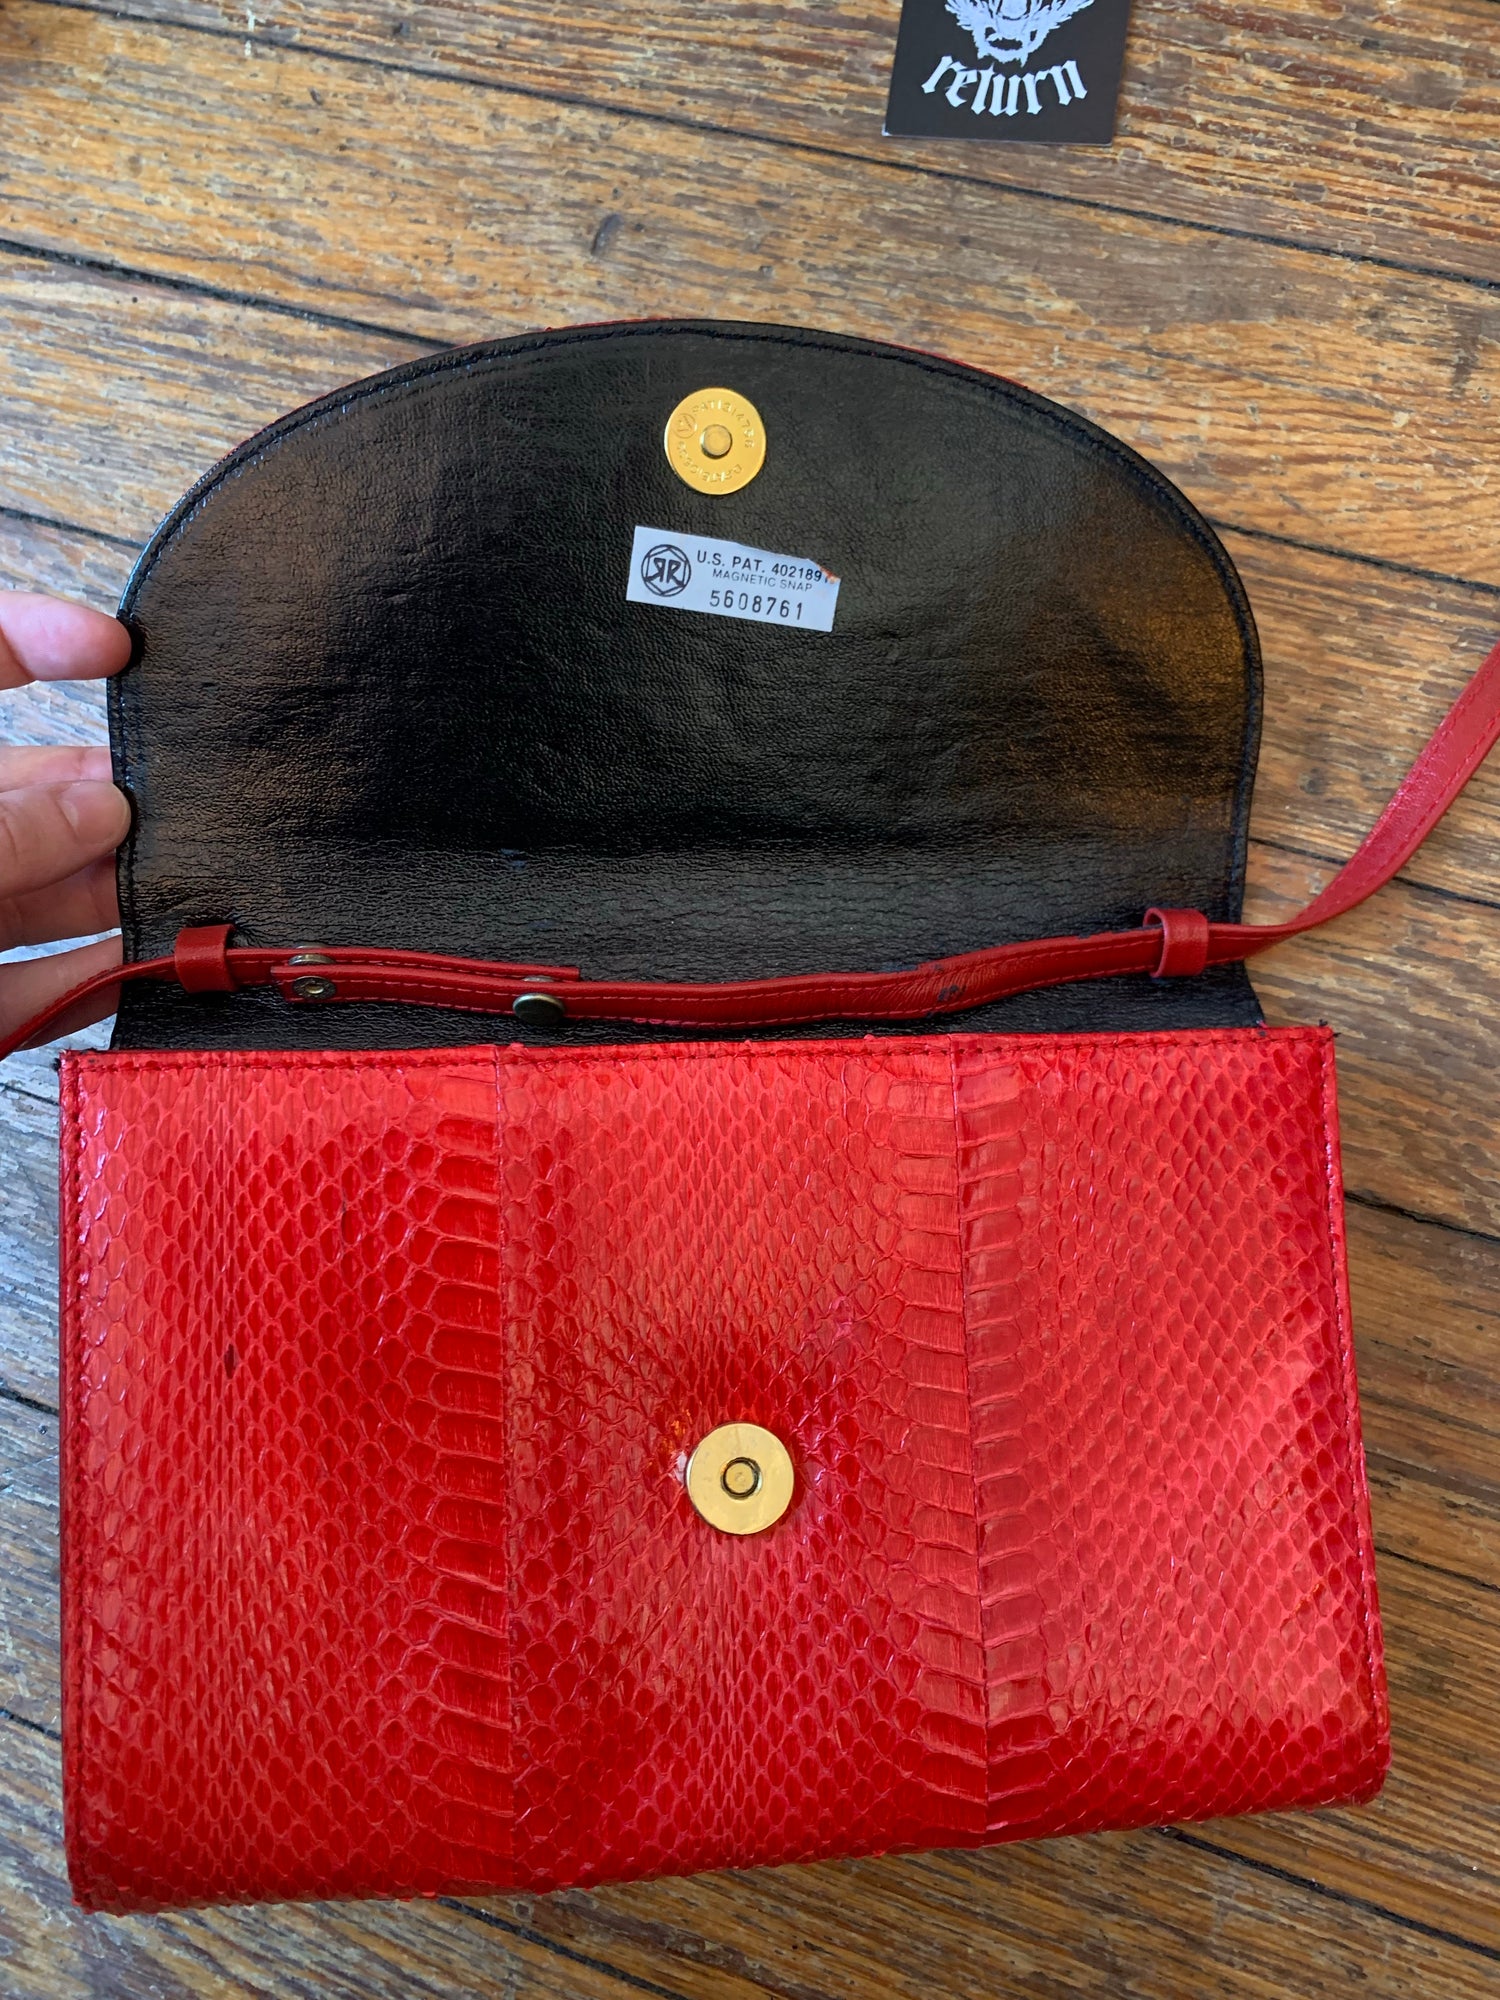 Giani Bernini Clutch Bag Vintage Purse Made in Hong Kong